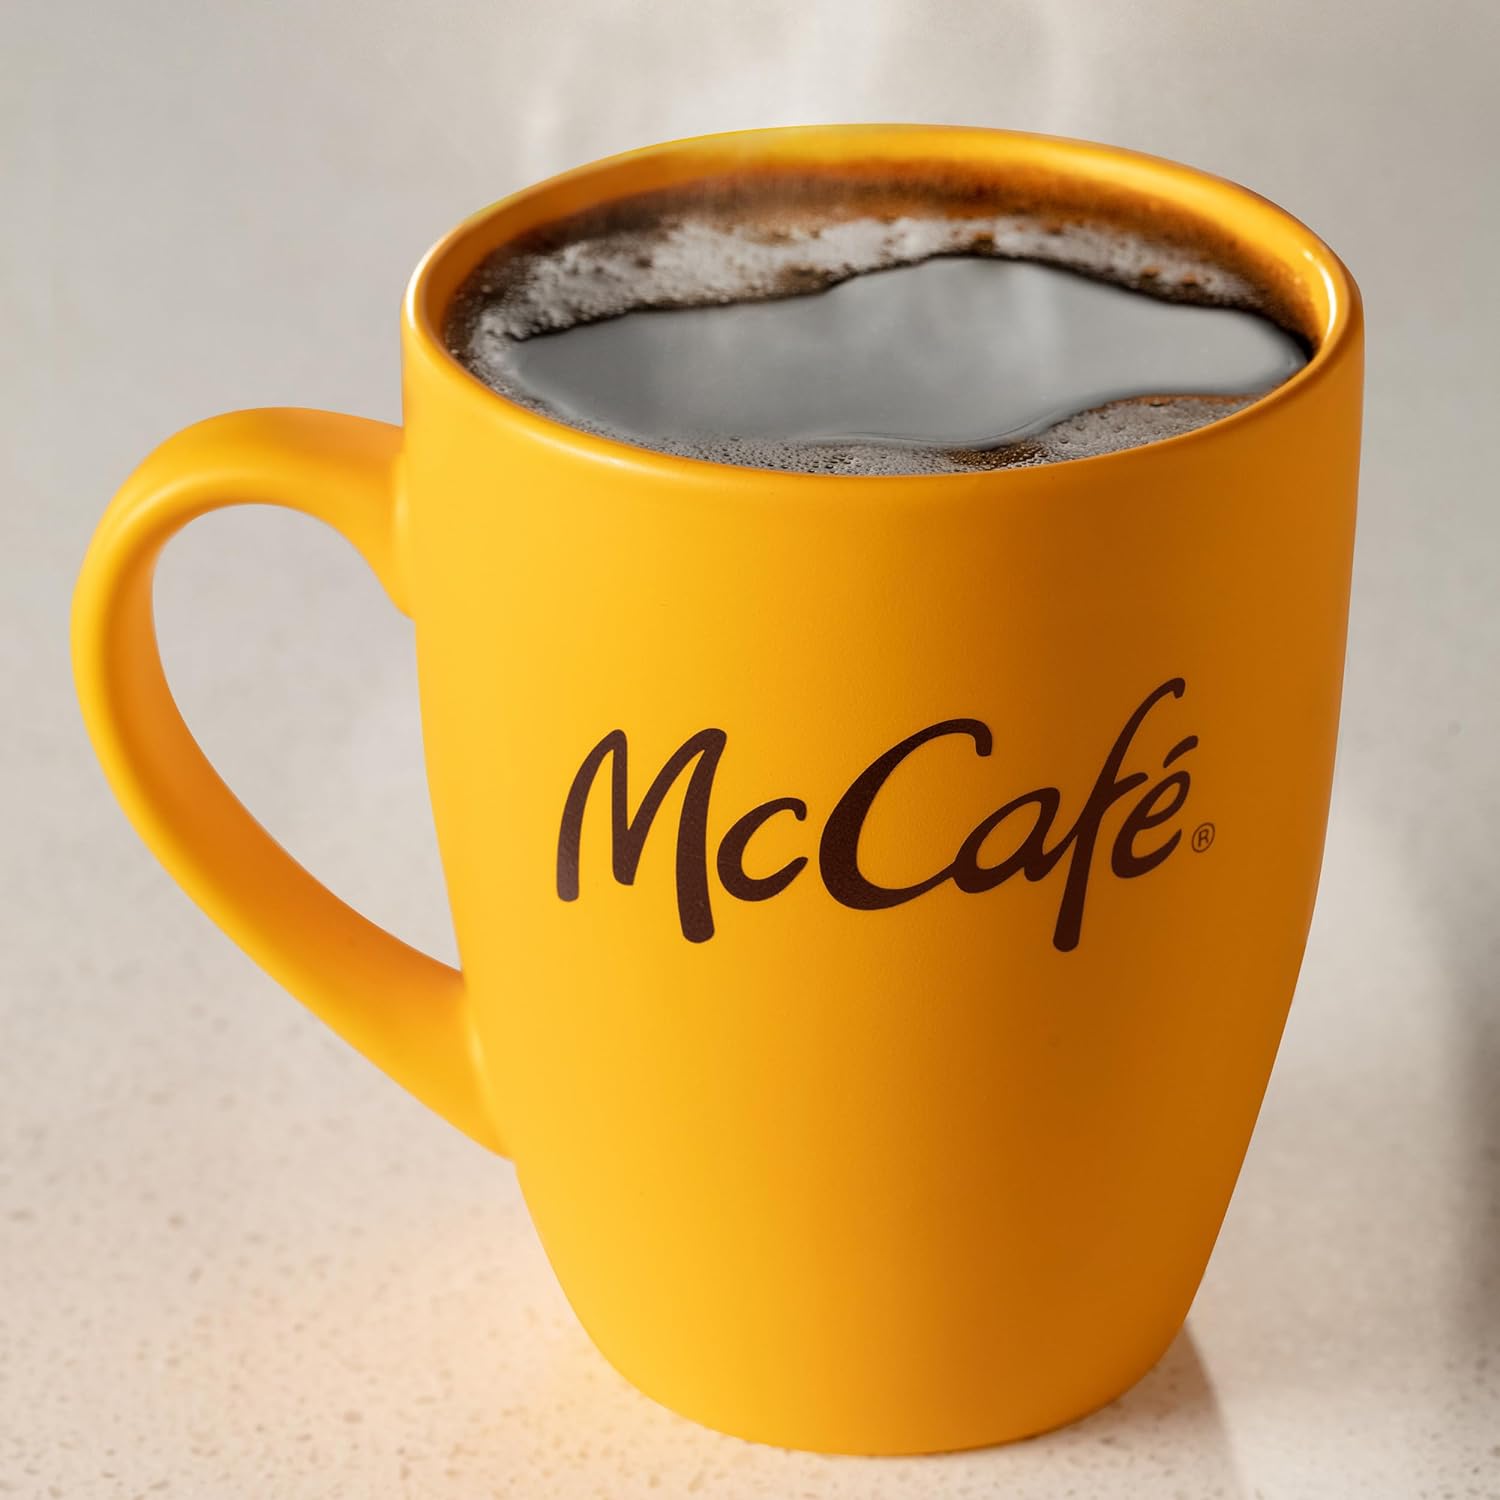 McCafe Premium Roast Decaf Coffee, Single Serve Keurig K-Cup Pods, Decaffeinated, 72 Count (6 Packs of 12) : Everything Else